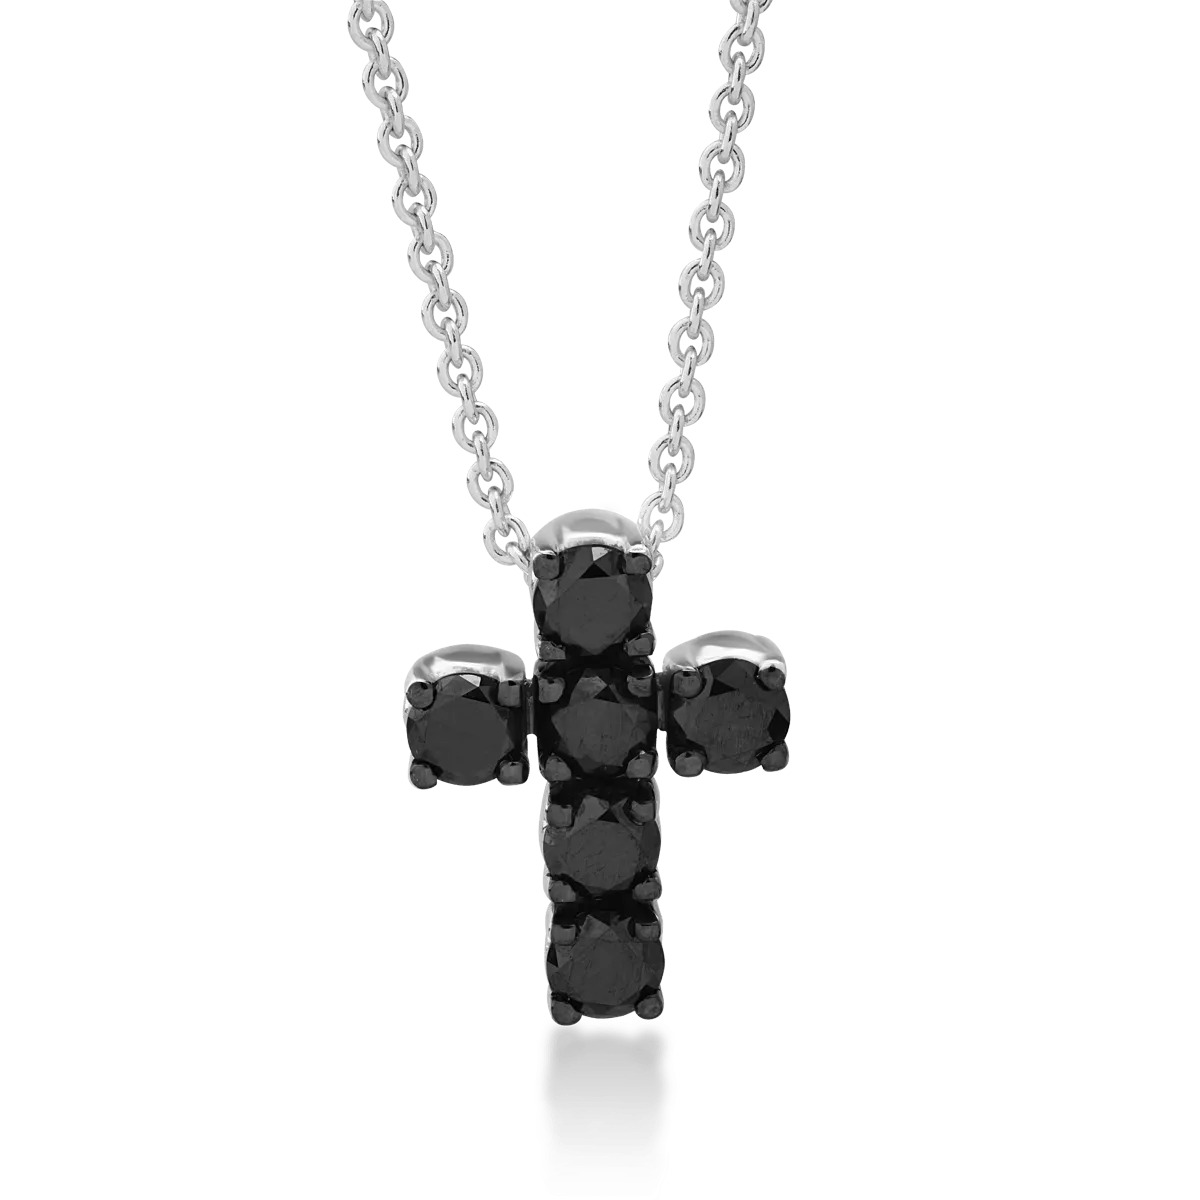 18K white gold cross pendant necklace with 0.64ct black diamonds